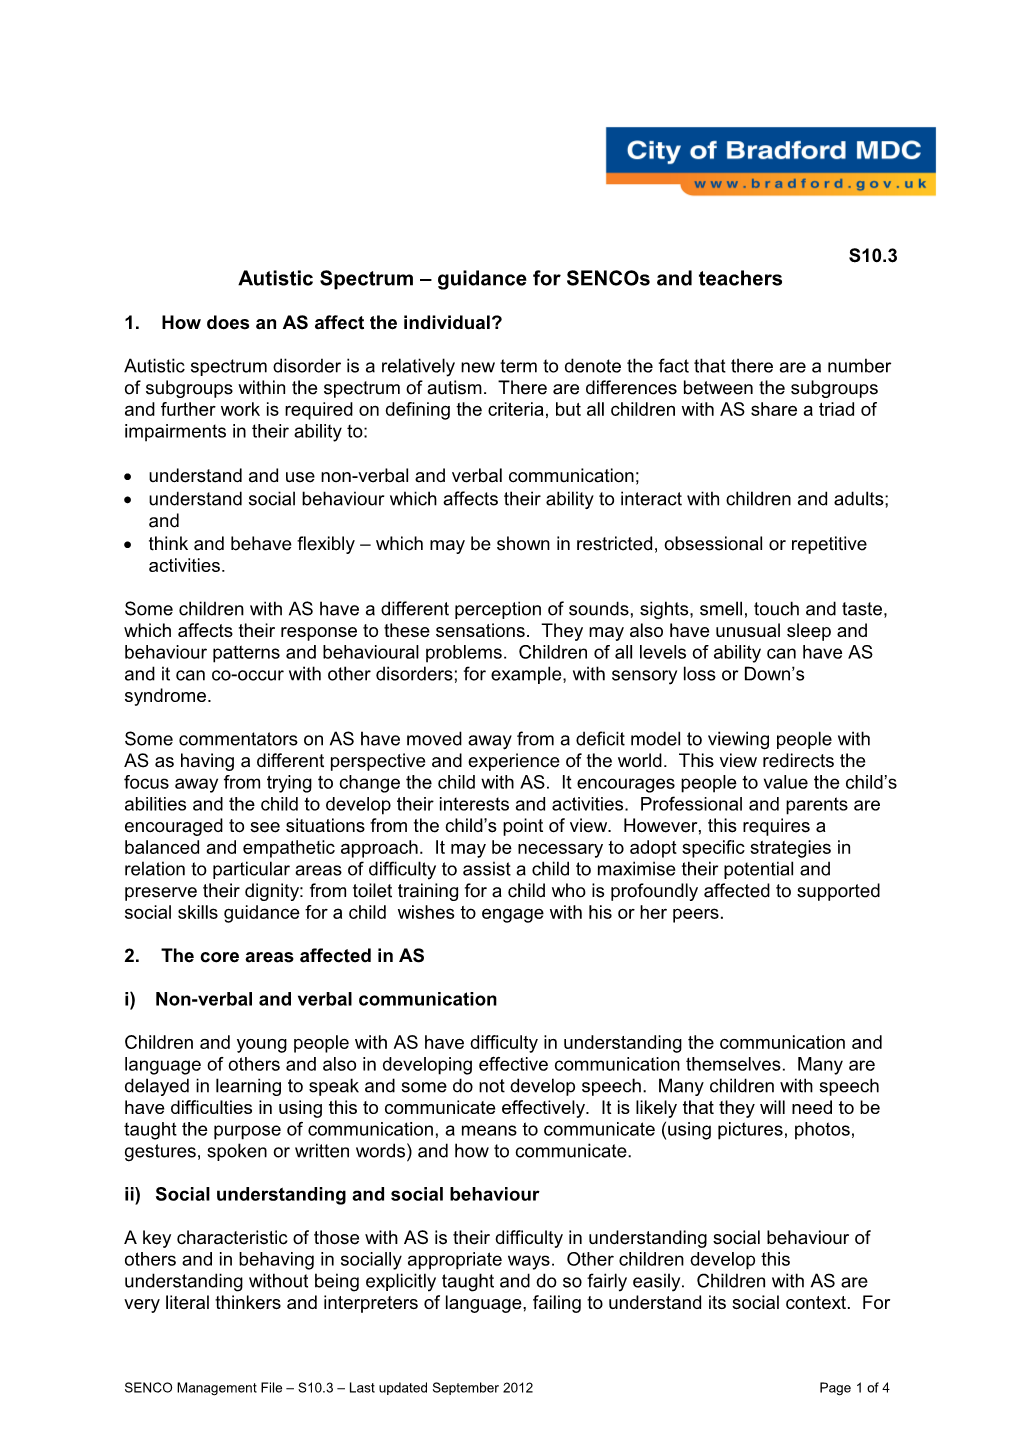 Autistic Spectrum Guidance for Sencos and Teachers